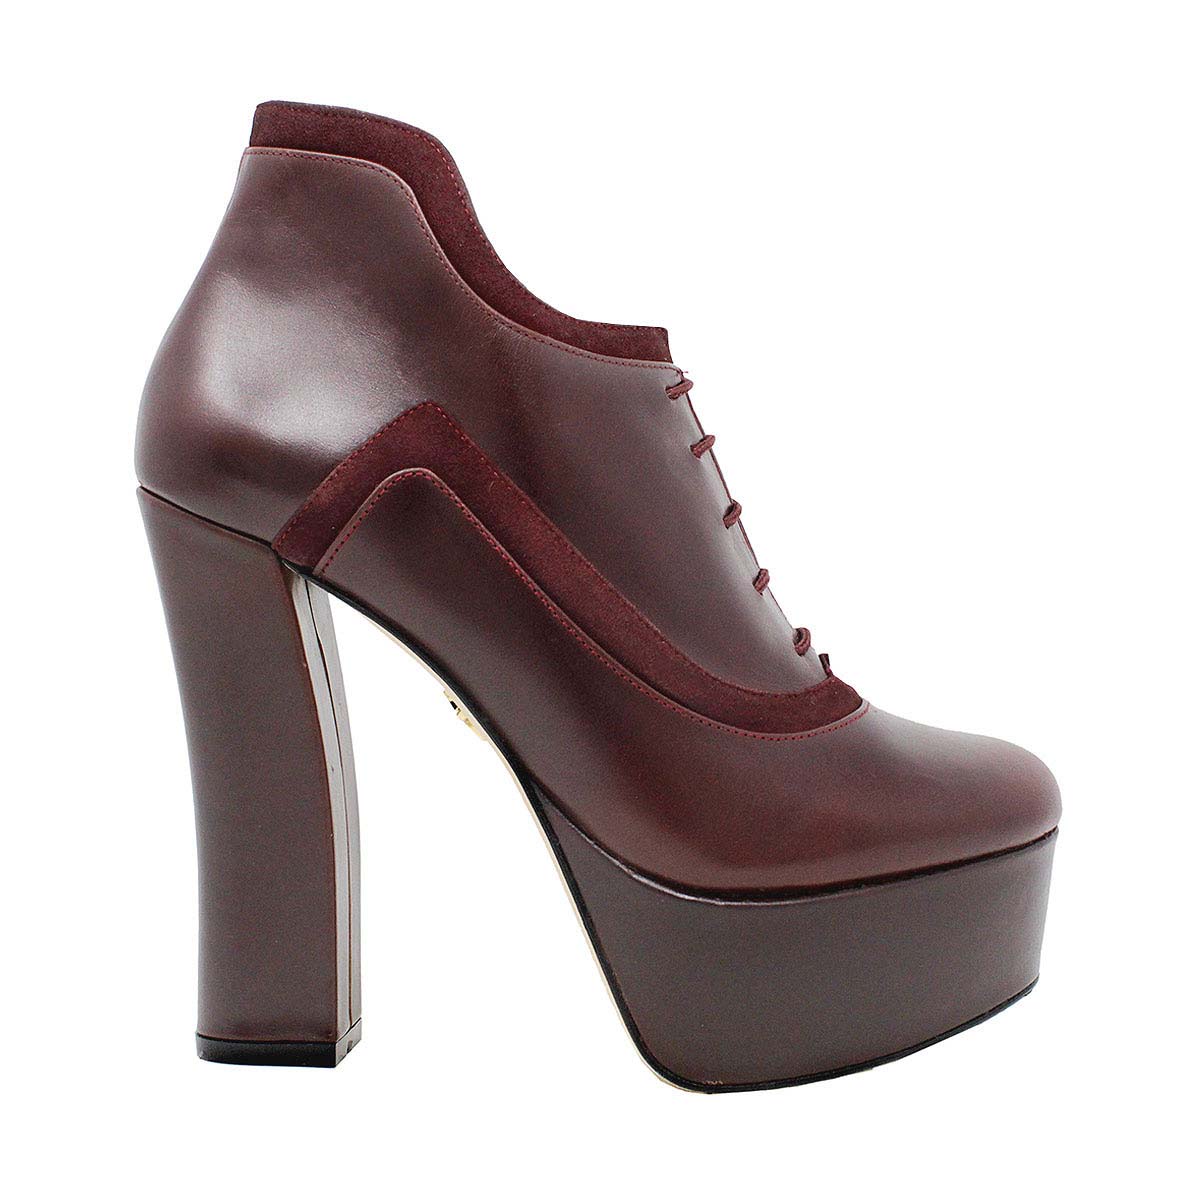 Handmade leather shoes | Regina Romero